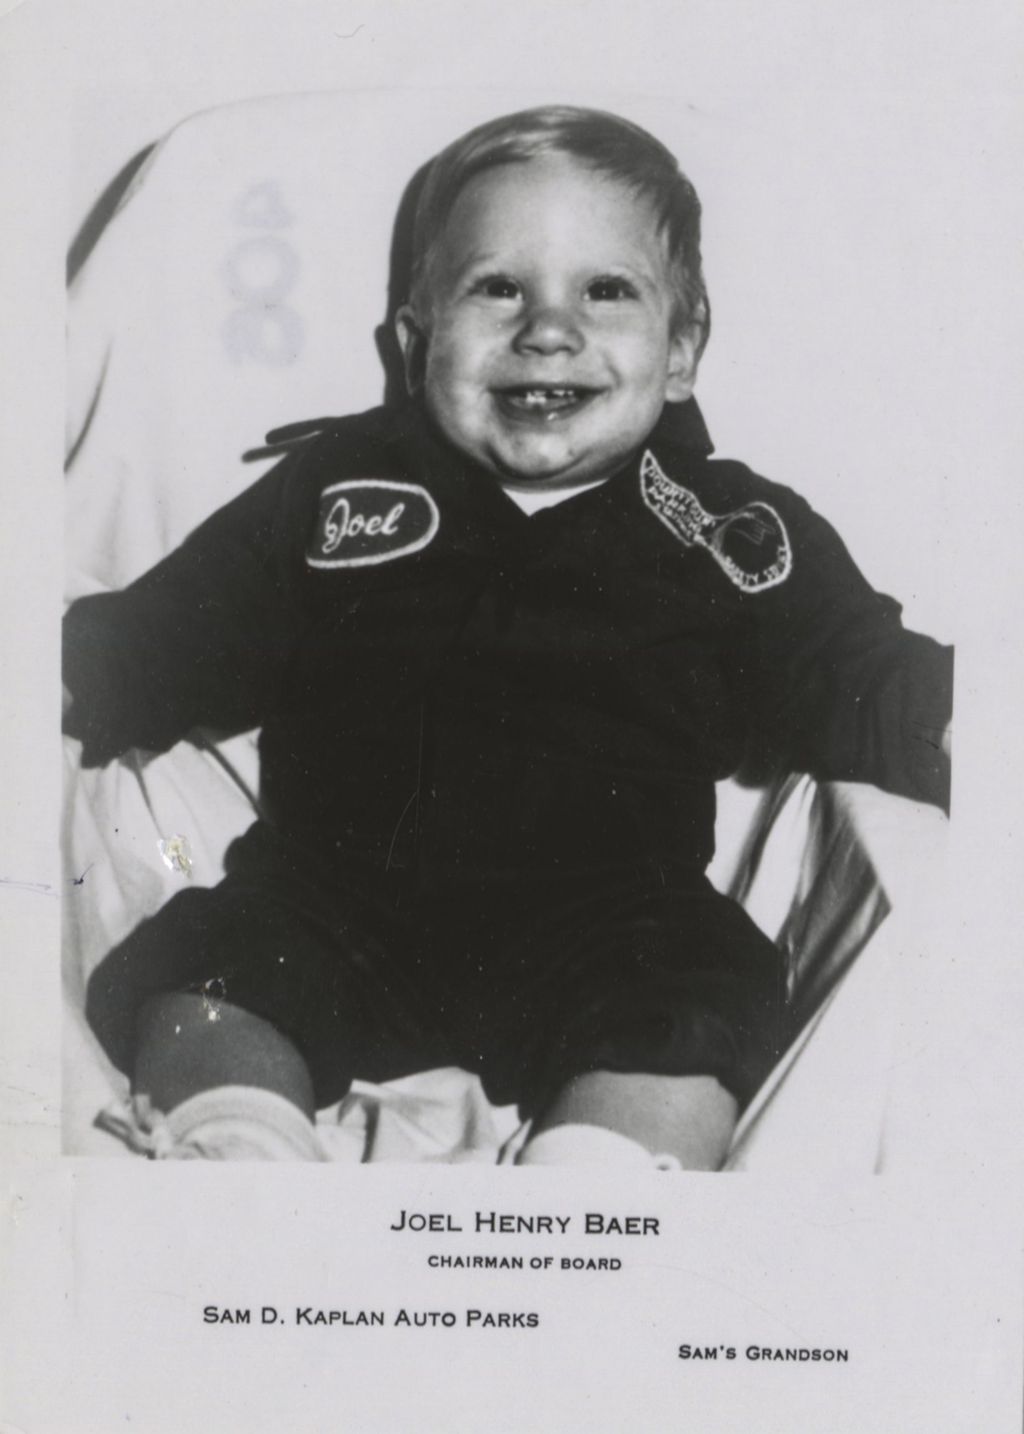 Miniature of Joel Henry Baer as a baby